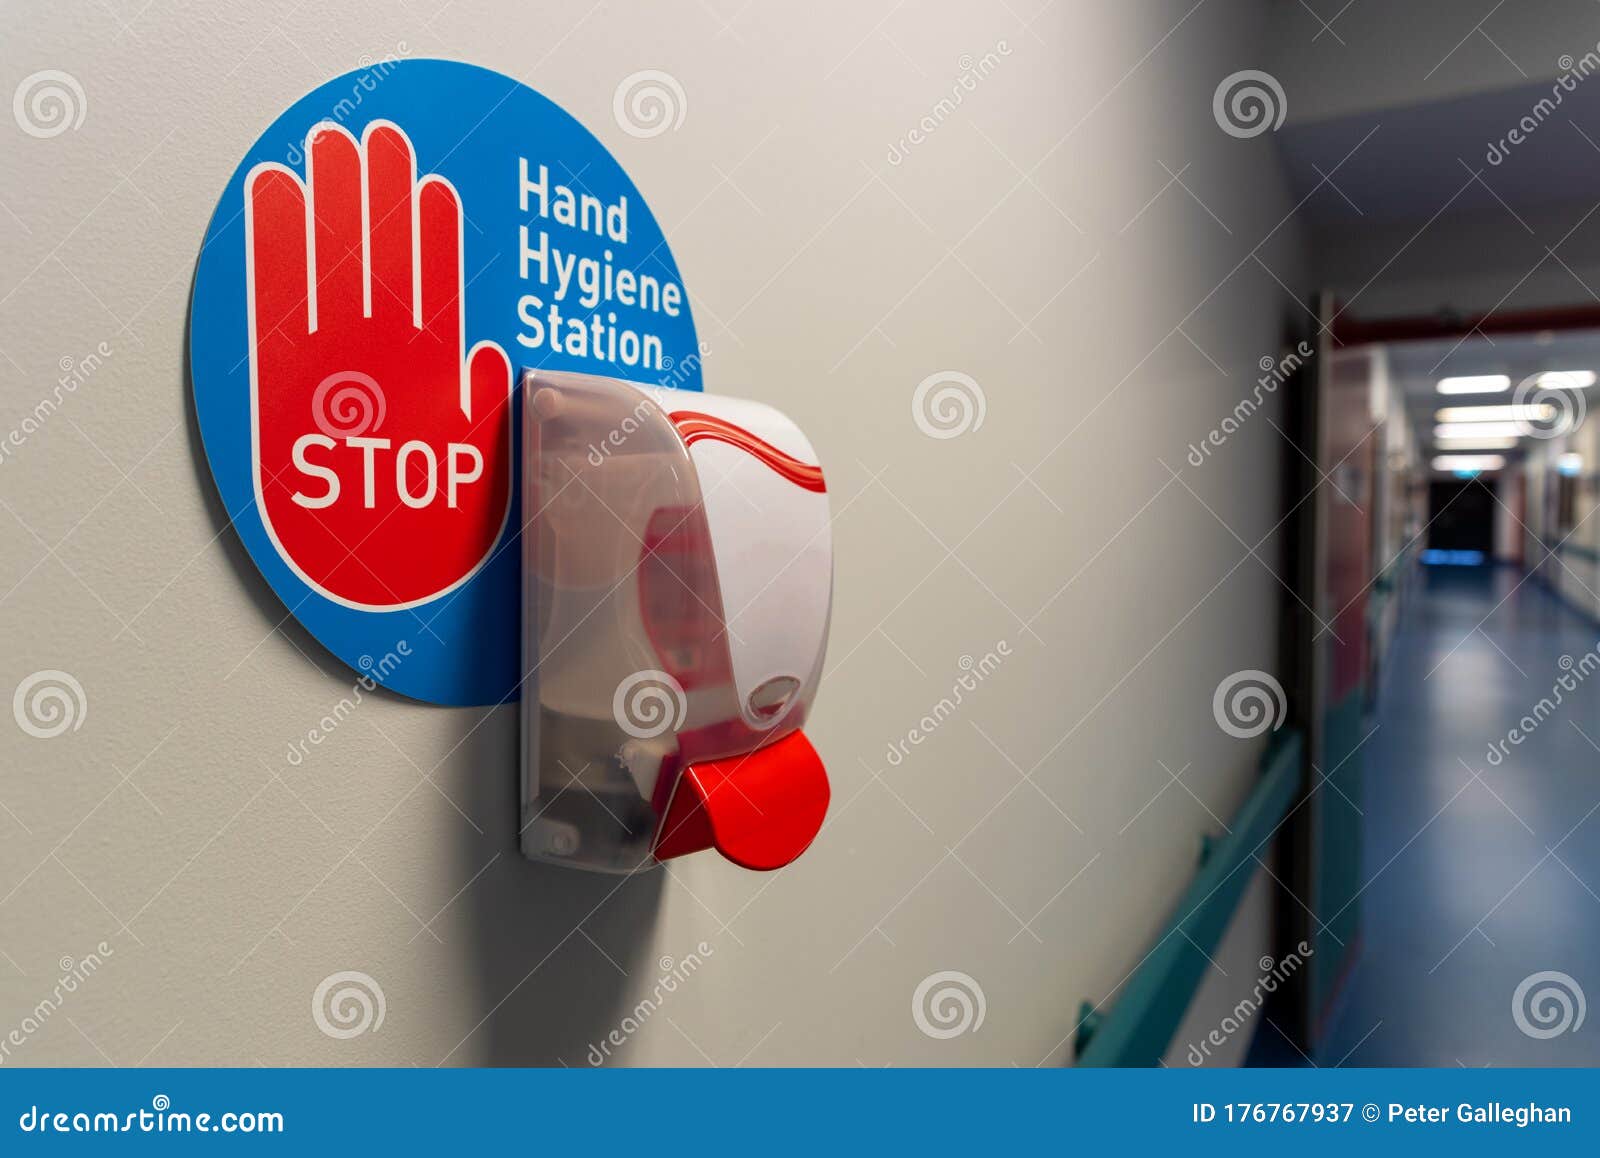 hand hygiene station in a hospital hall way